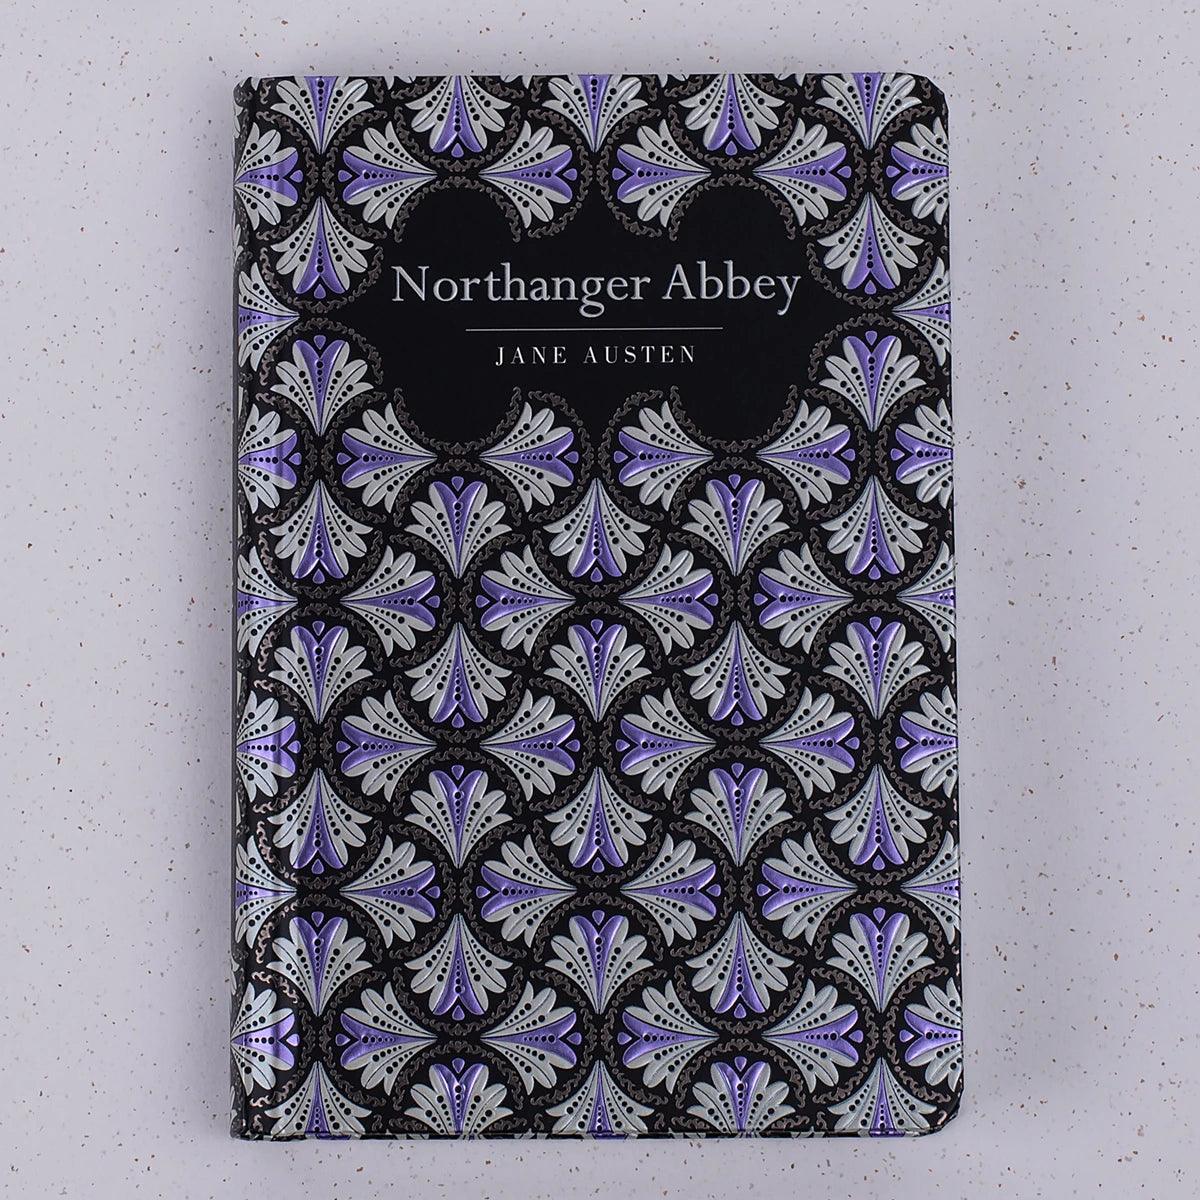 Northanger Abbey - Luxury Hardback Edition